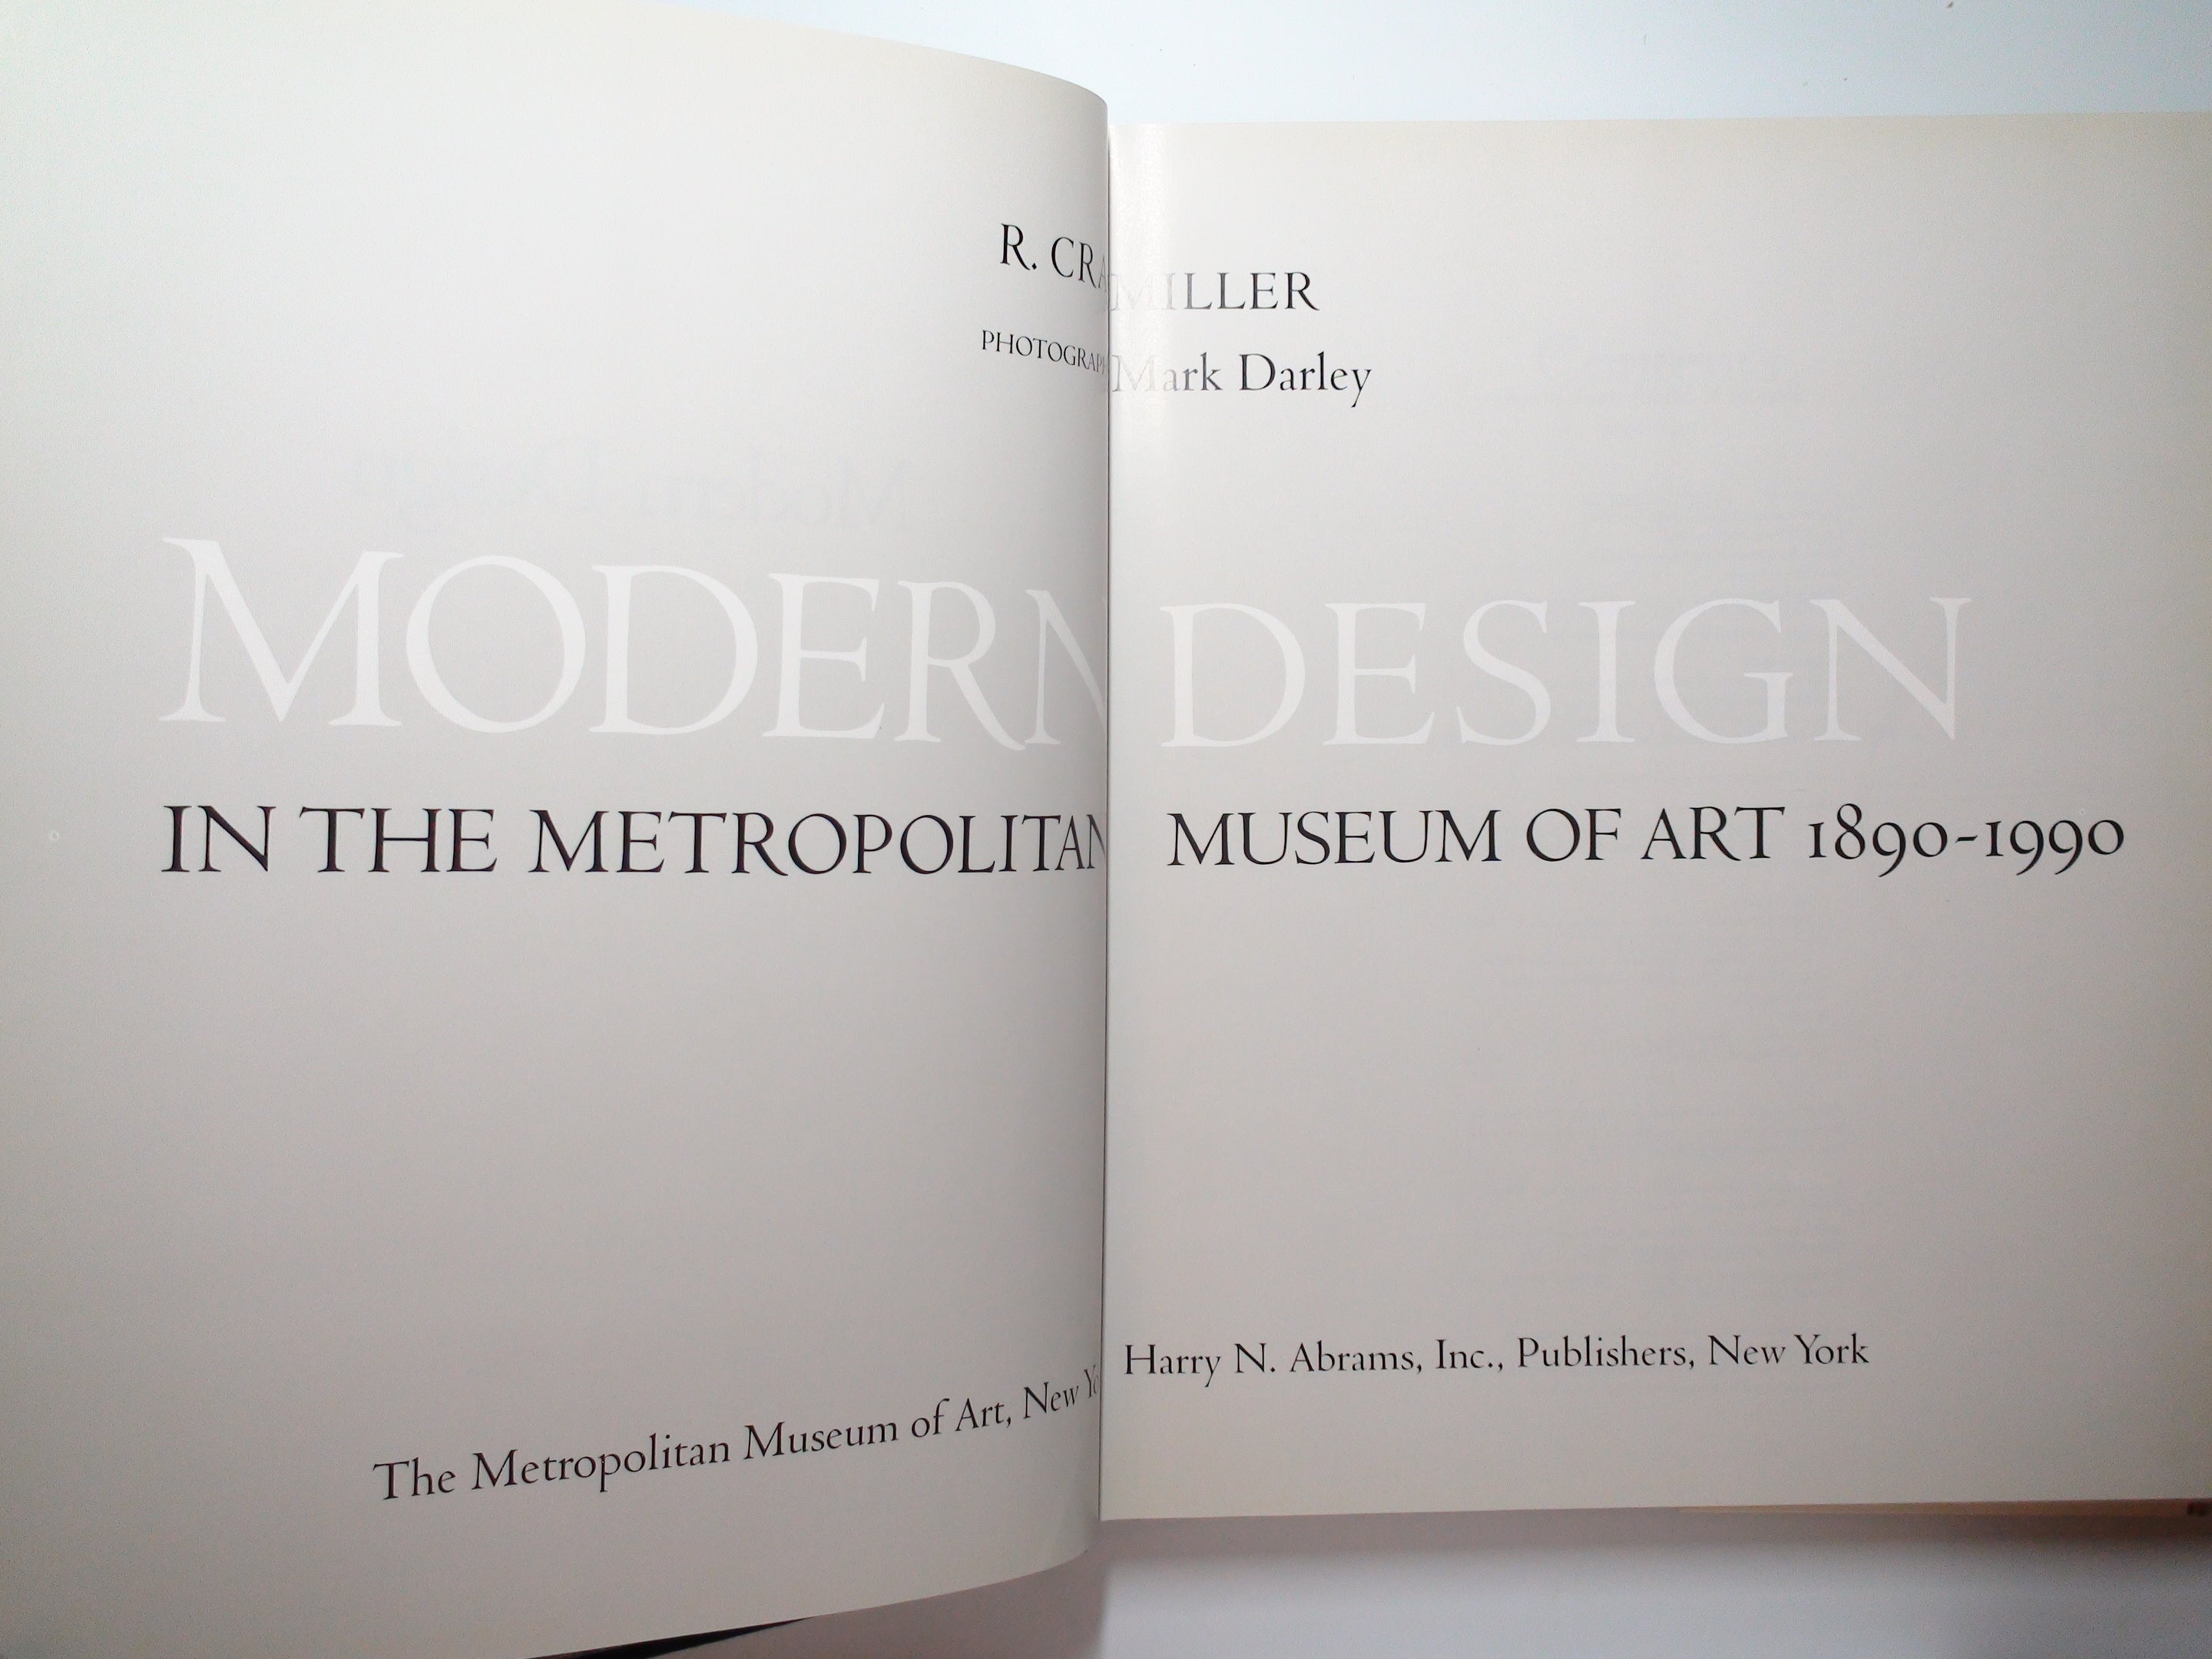 Modern Design In the Metropolitan Museum of Art 1890-1990, R. Craig Miller, 1990